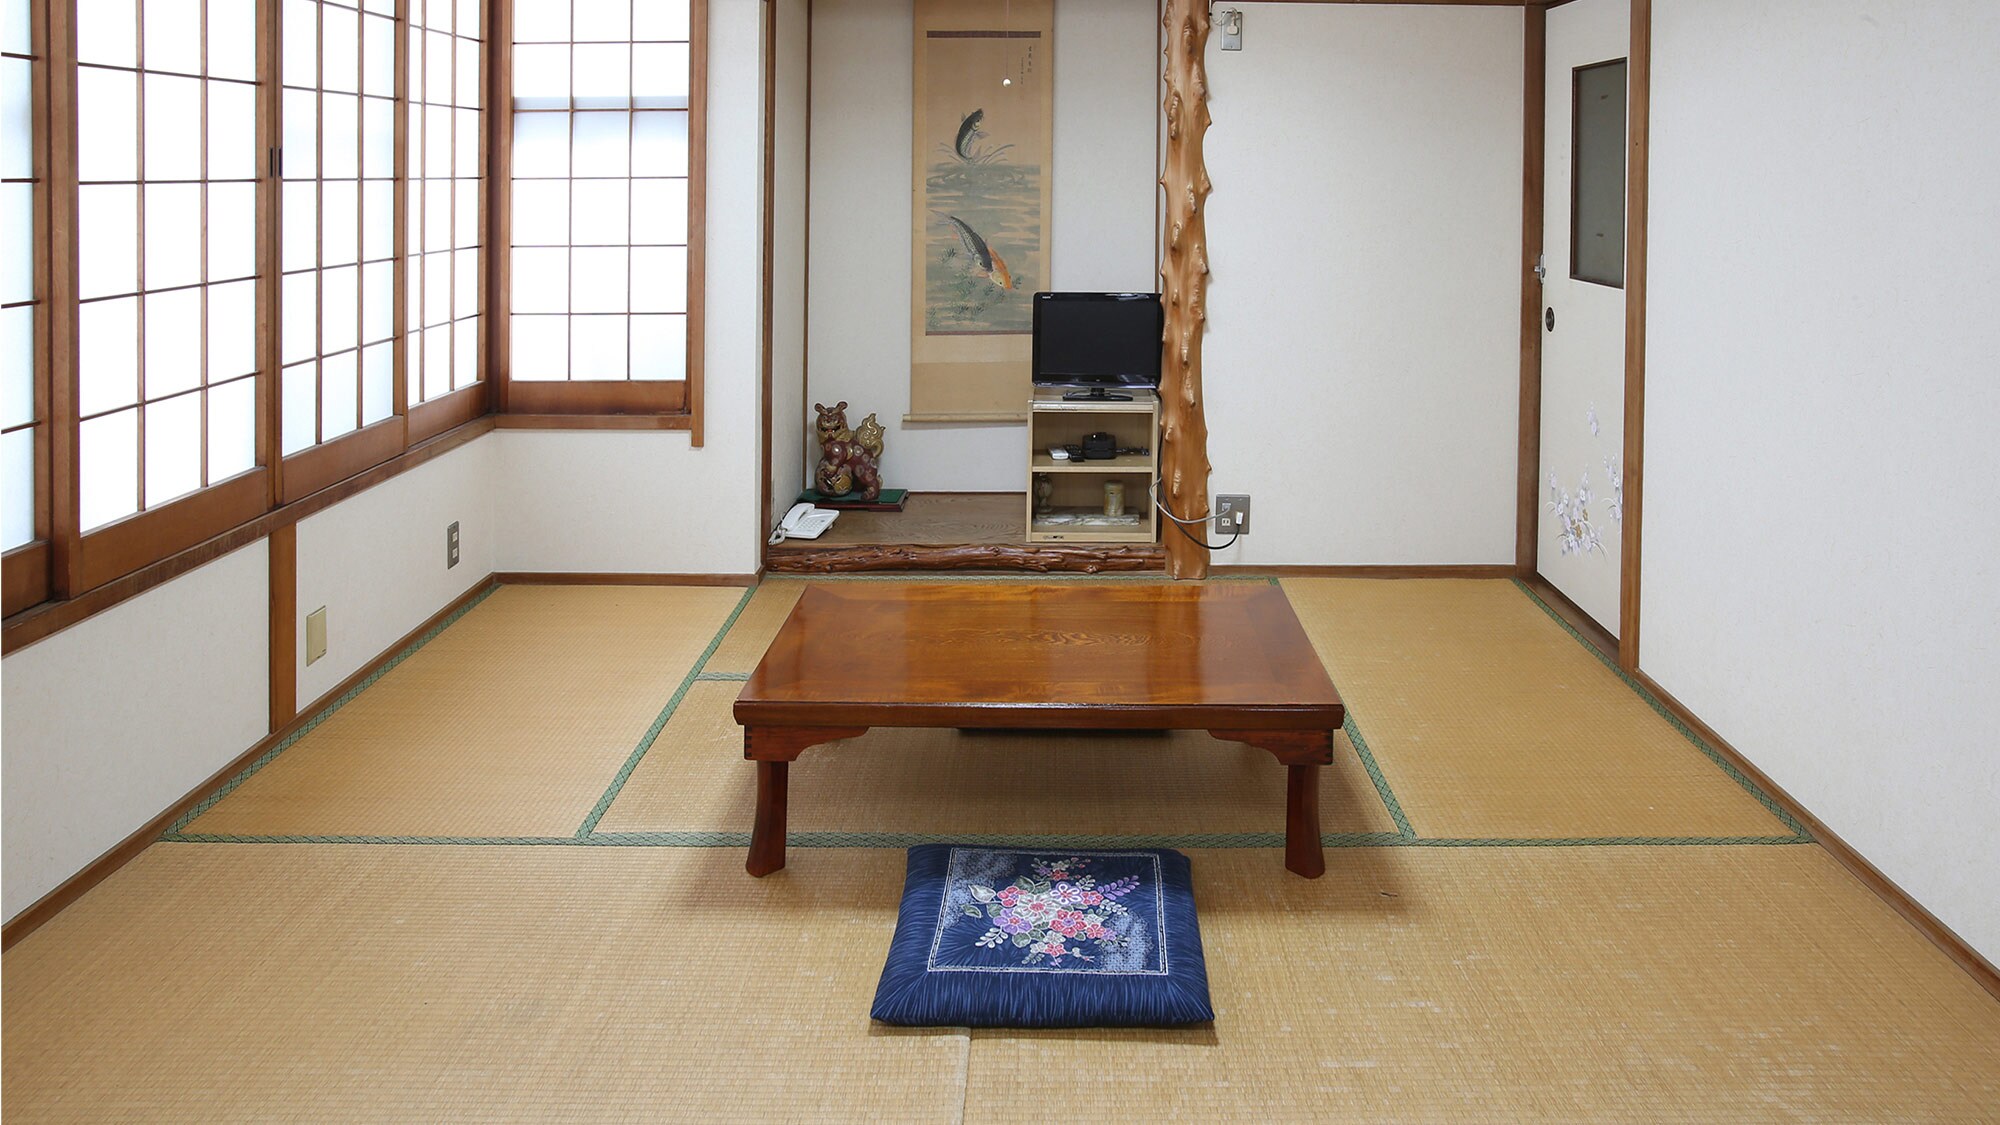 ・ Japanese-style room 10 tatami mats